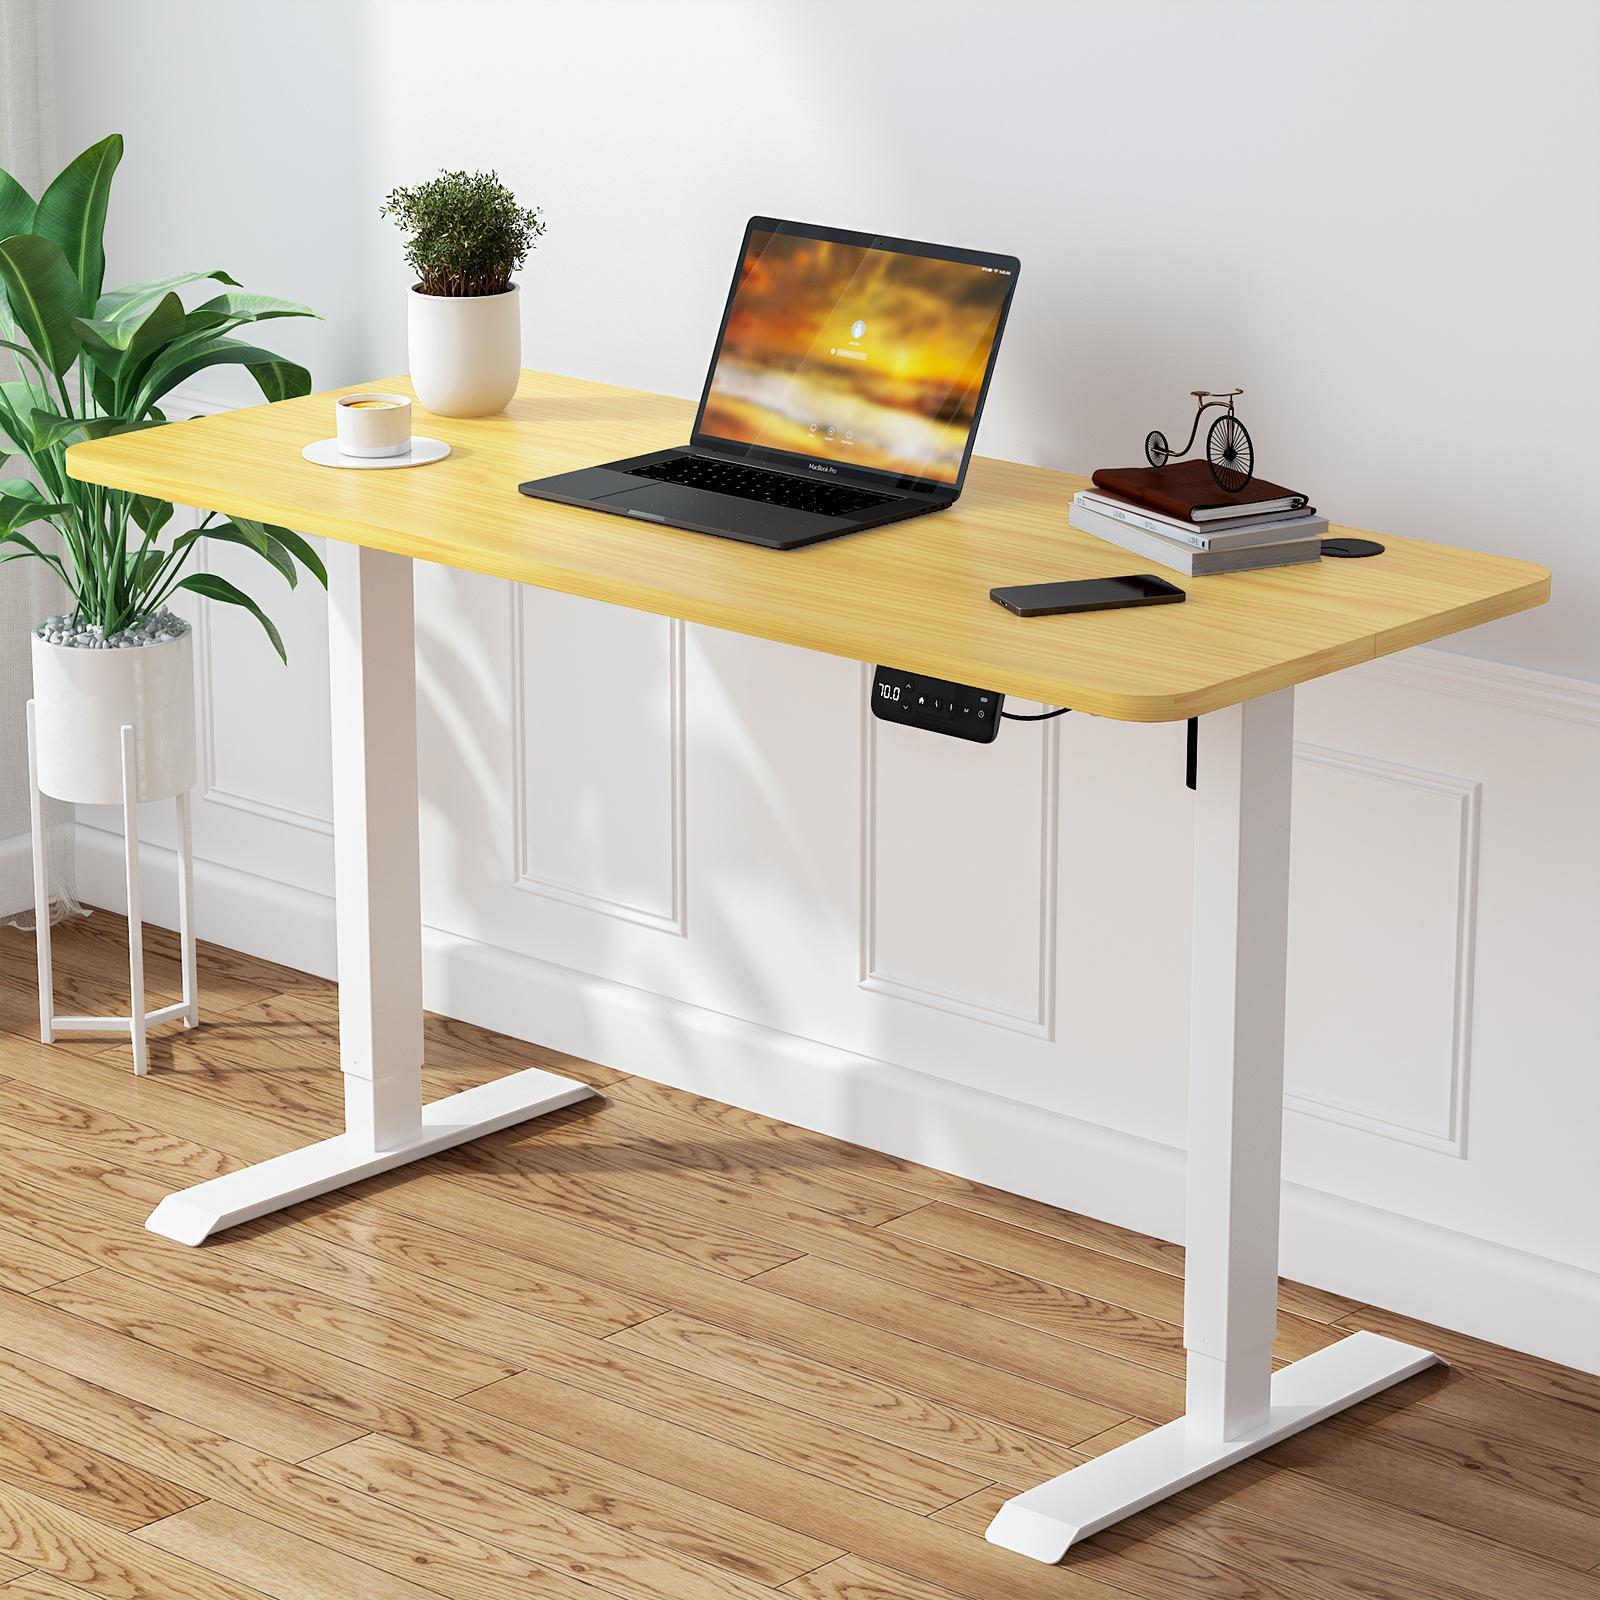 Advwin Standing Desk Electric Adjustable Height Oak color 140cm